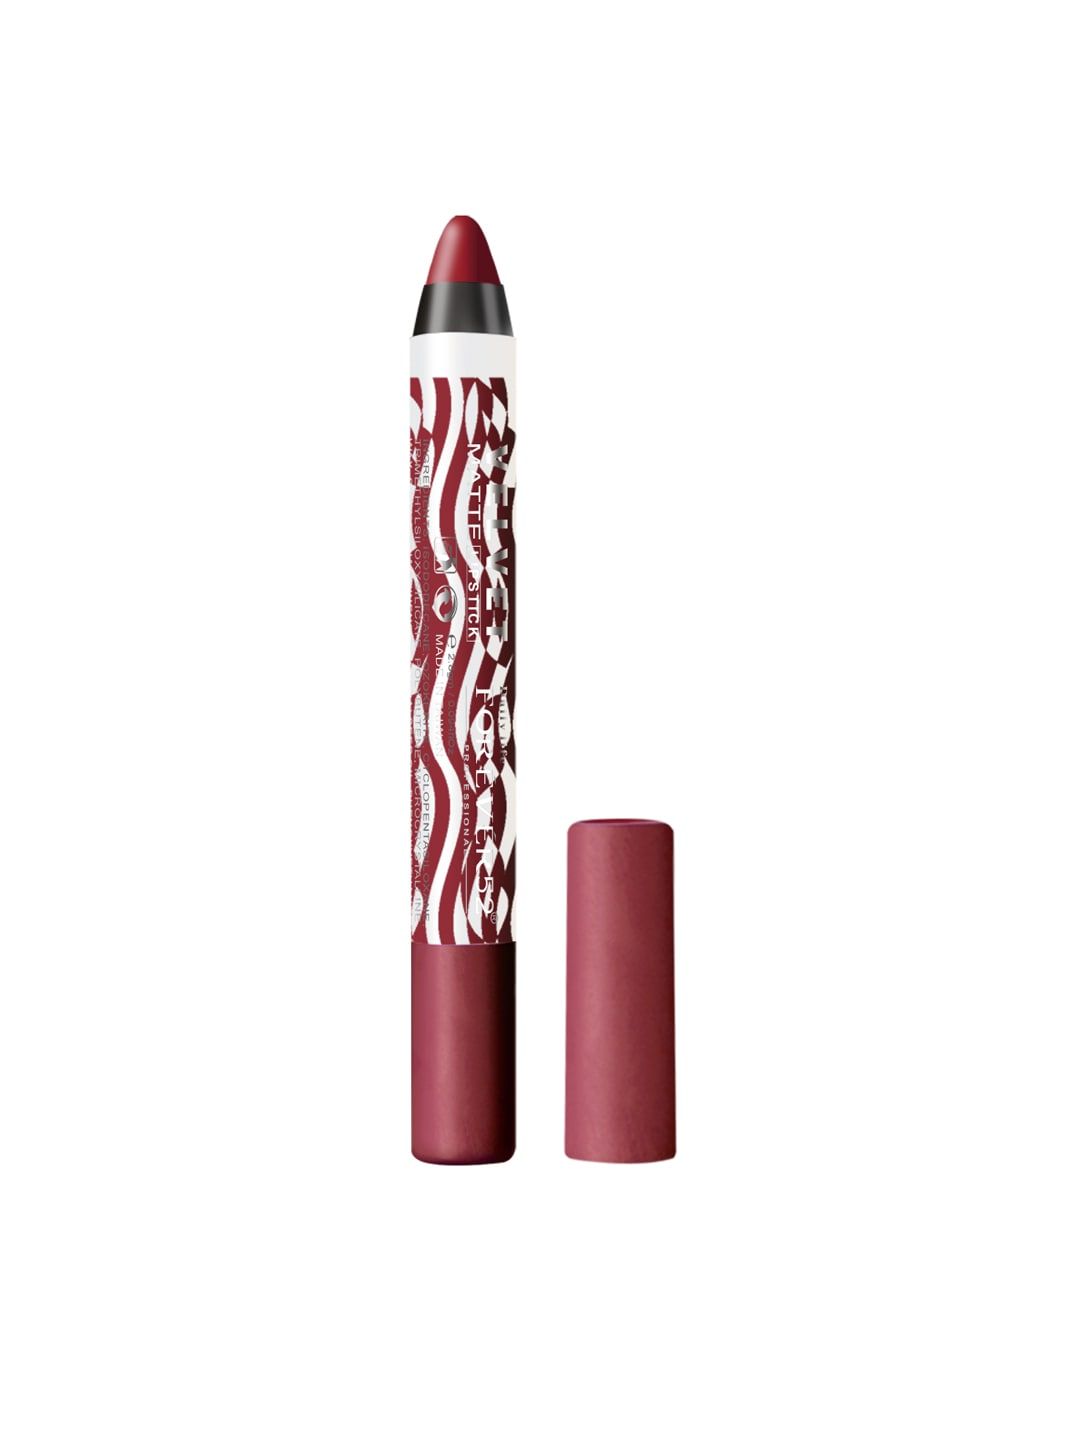 Daily Life Forever52 Red Velvet Matte Lipstick Price in India